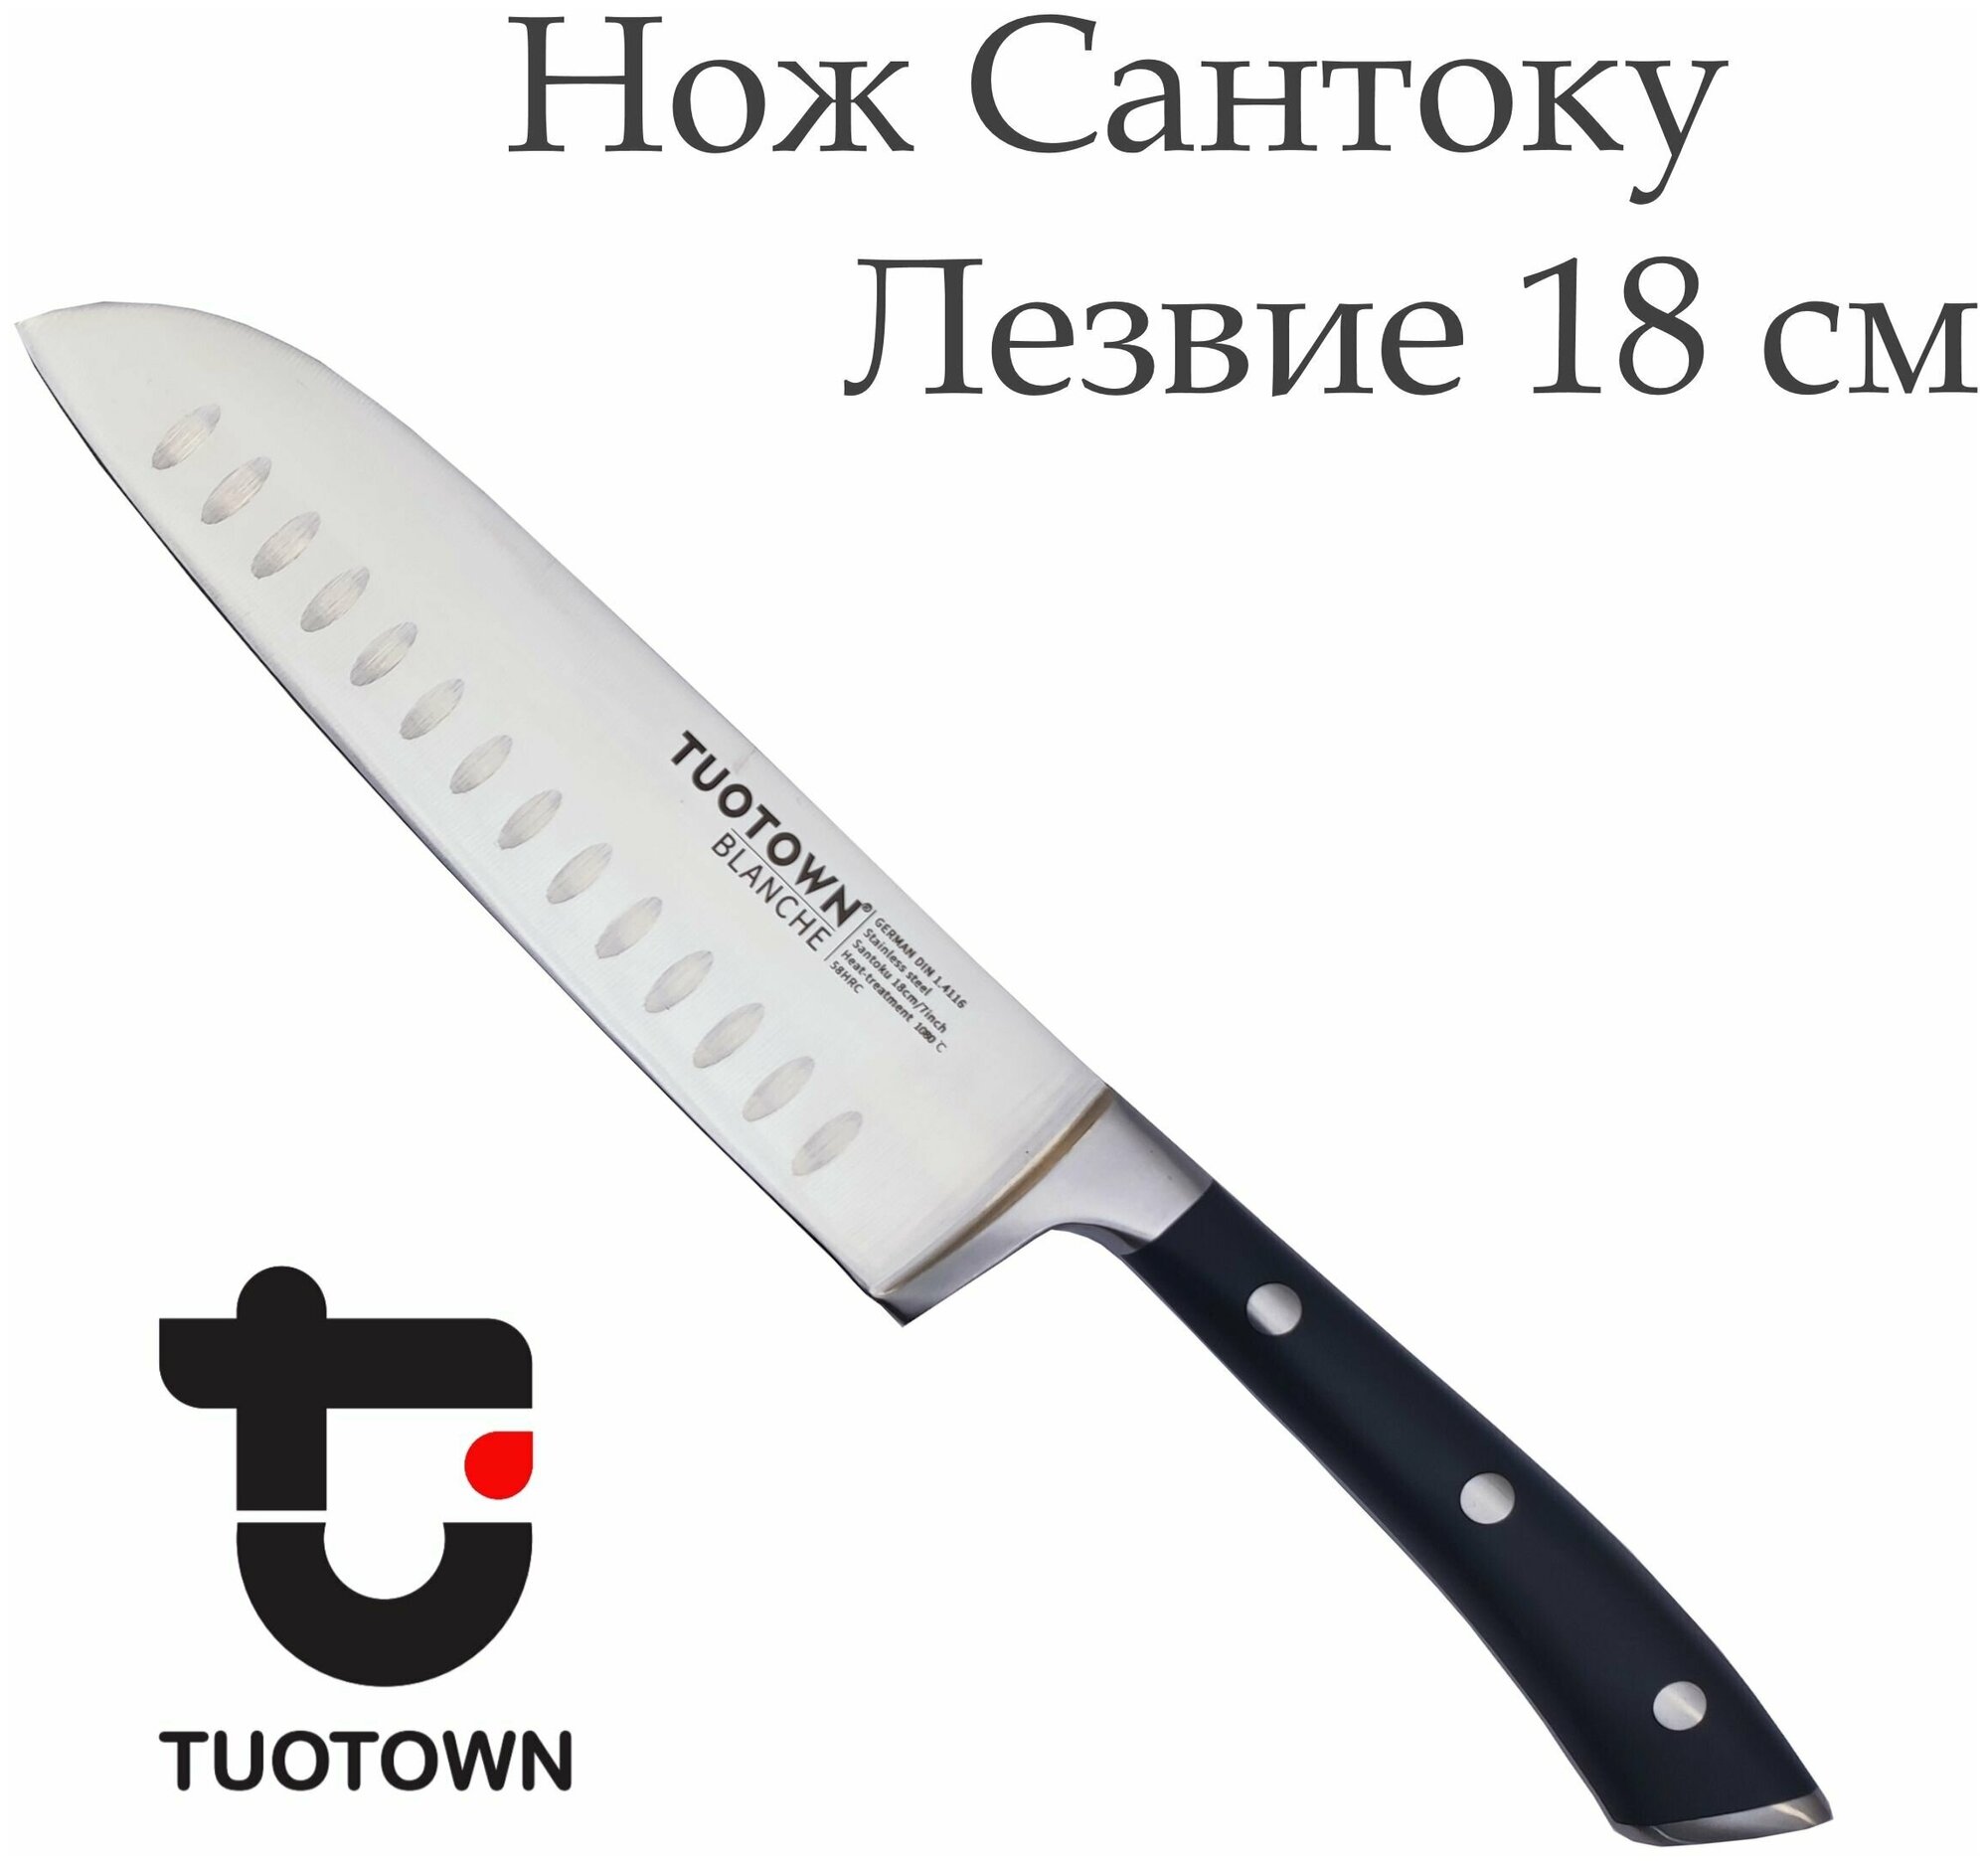 Нож кухонный Сантоку TUOTOWN клинок 18 см.